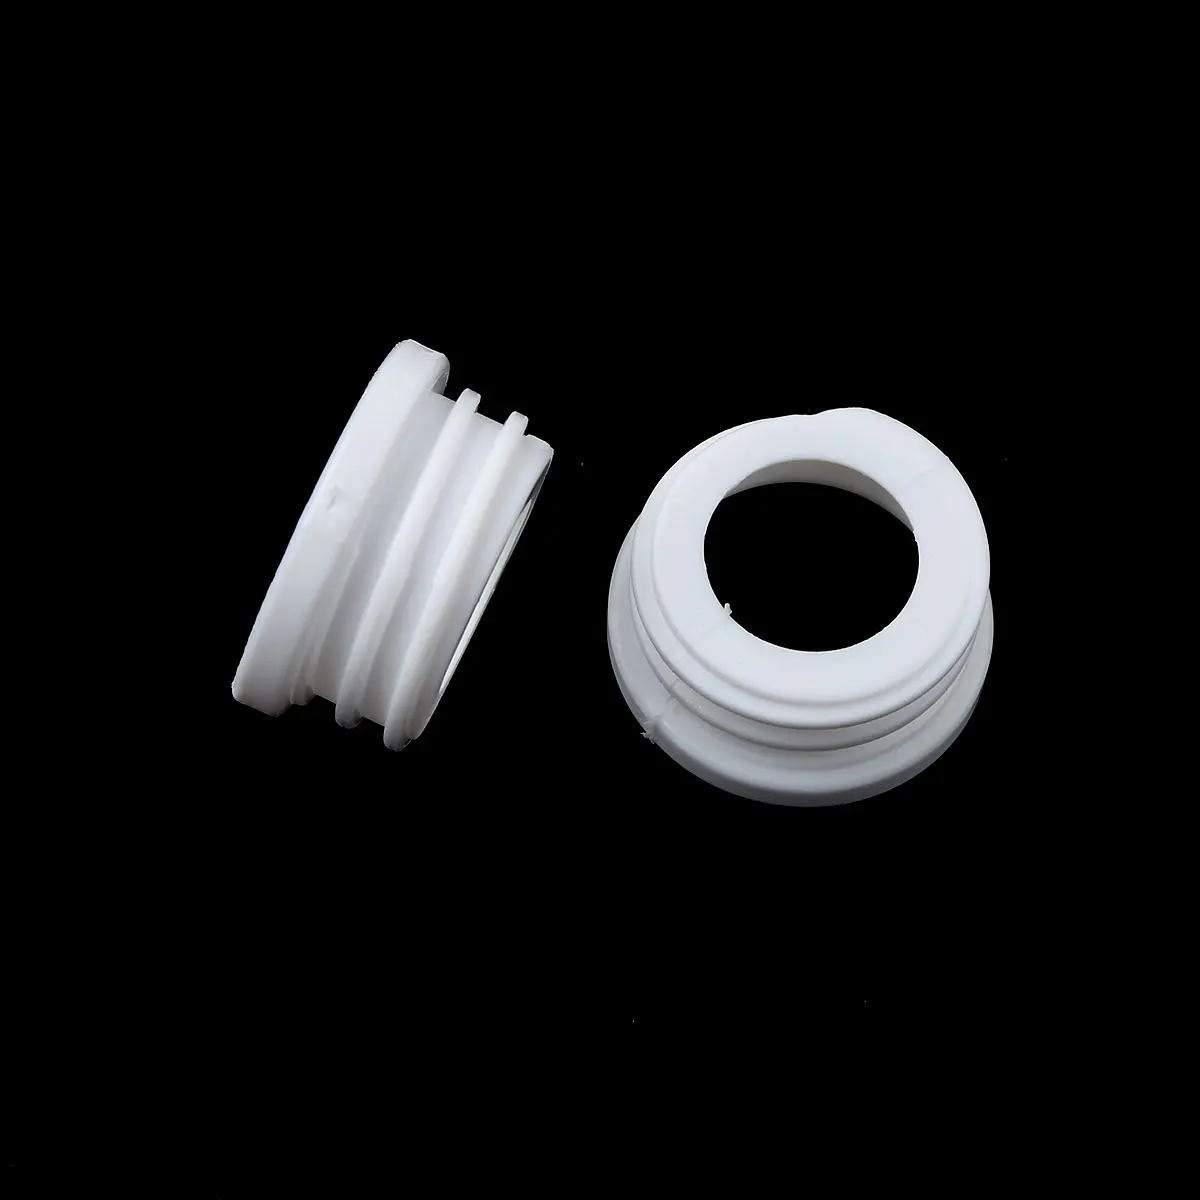 20Pcs Plastic Collar Rings for 28/400 Threaded Mason Jars Soap Dispenser Pumps 